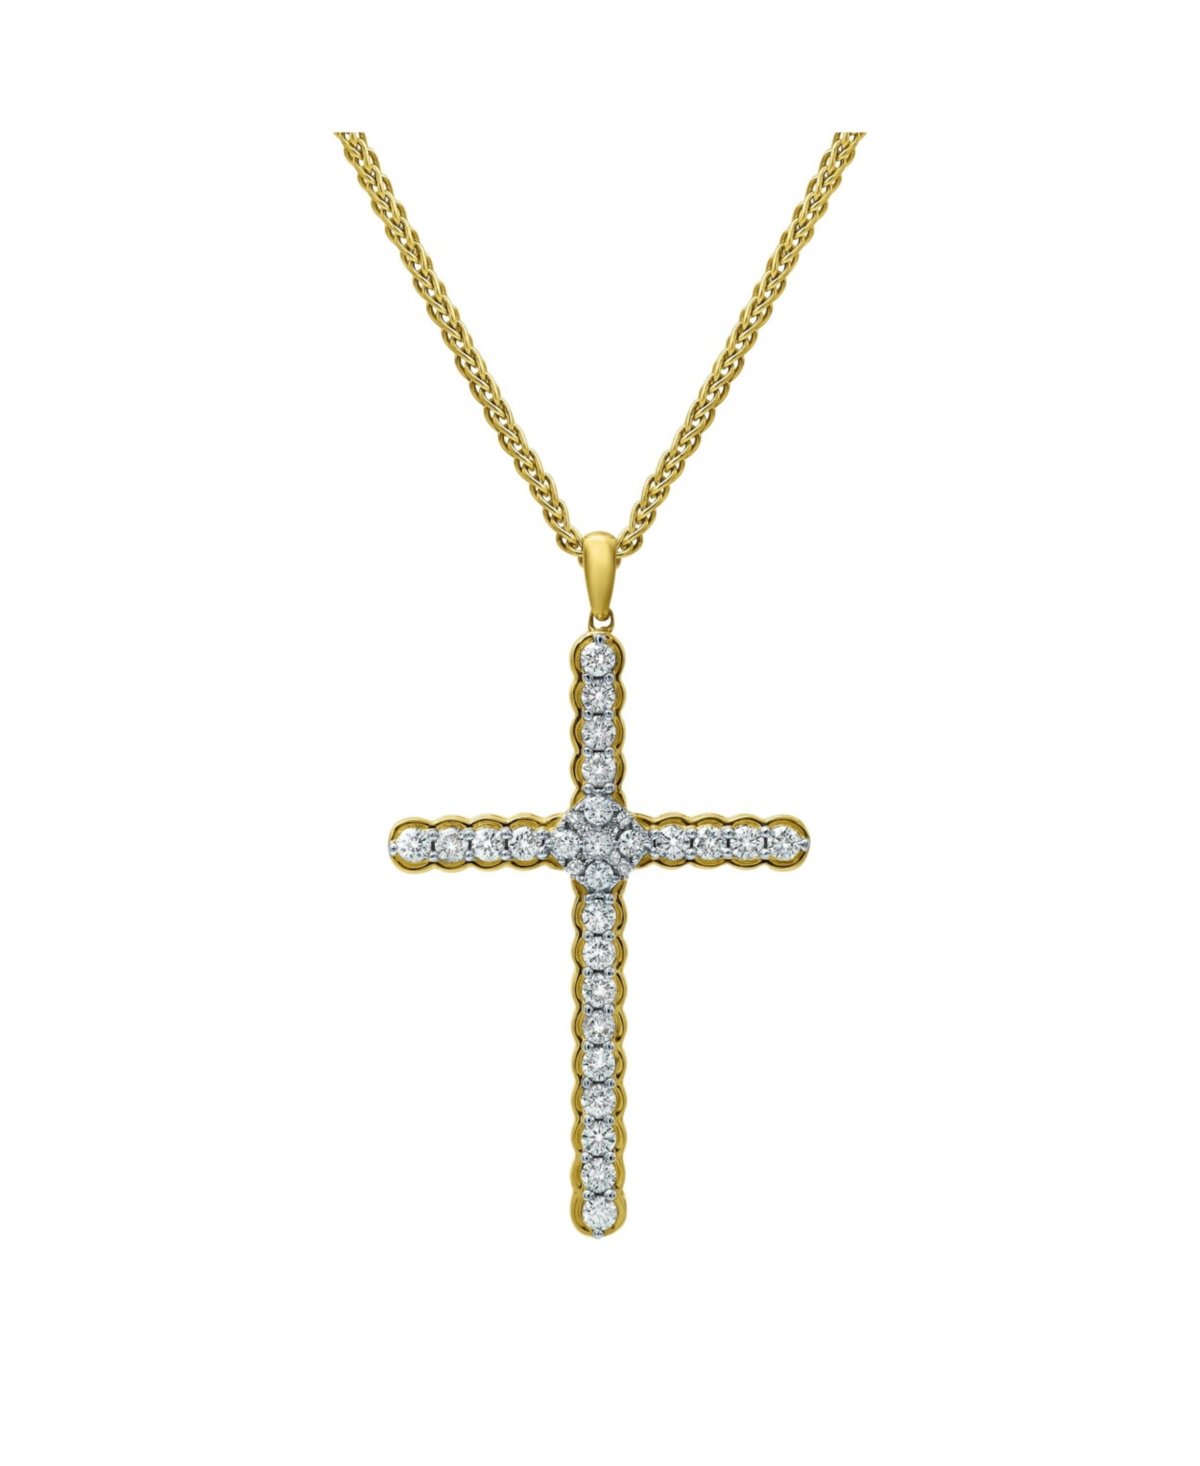 Kings Cross Natural Round Cut Diamond Pendant (1.02 cttw), in 14k Yellow Gold for Women & Men - Yellow